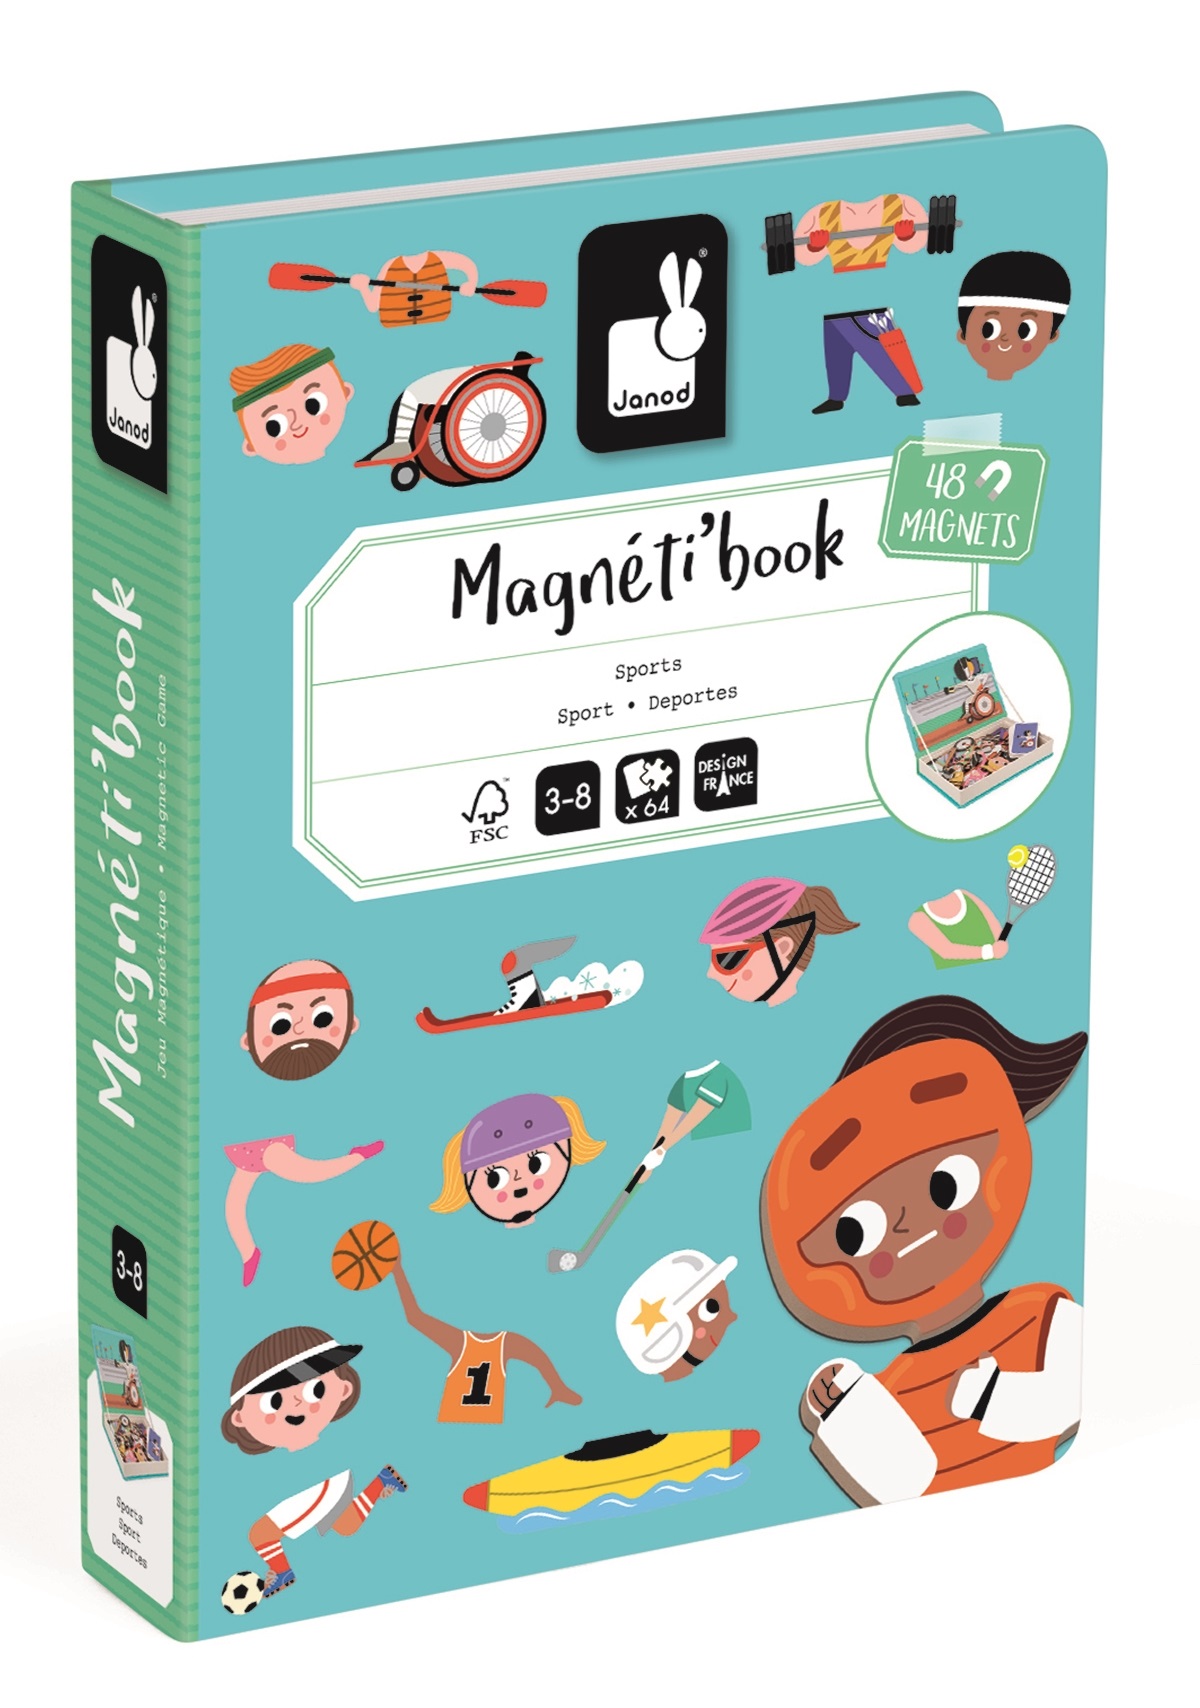 Boîte du jeu Magnéti'book - Sports